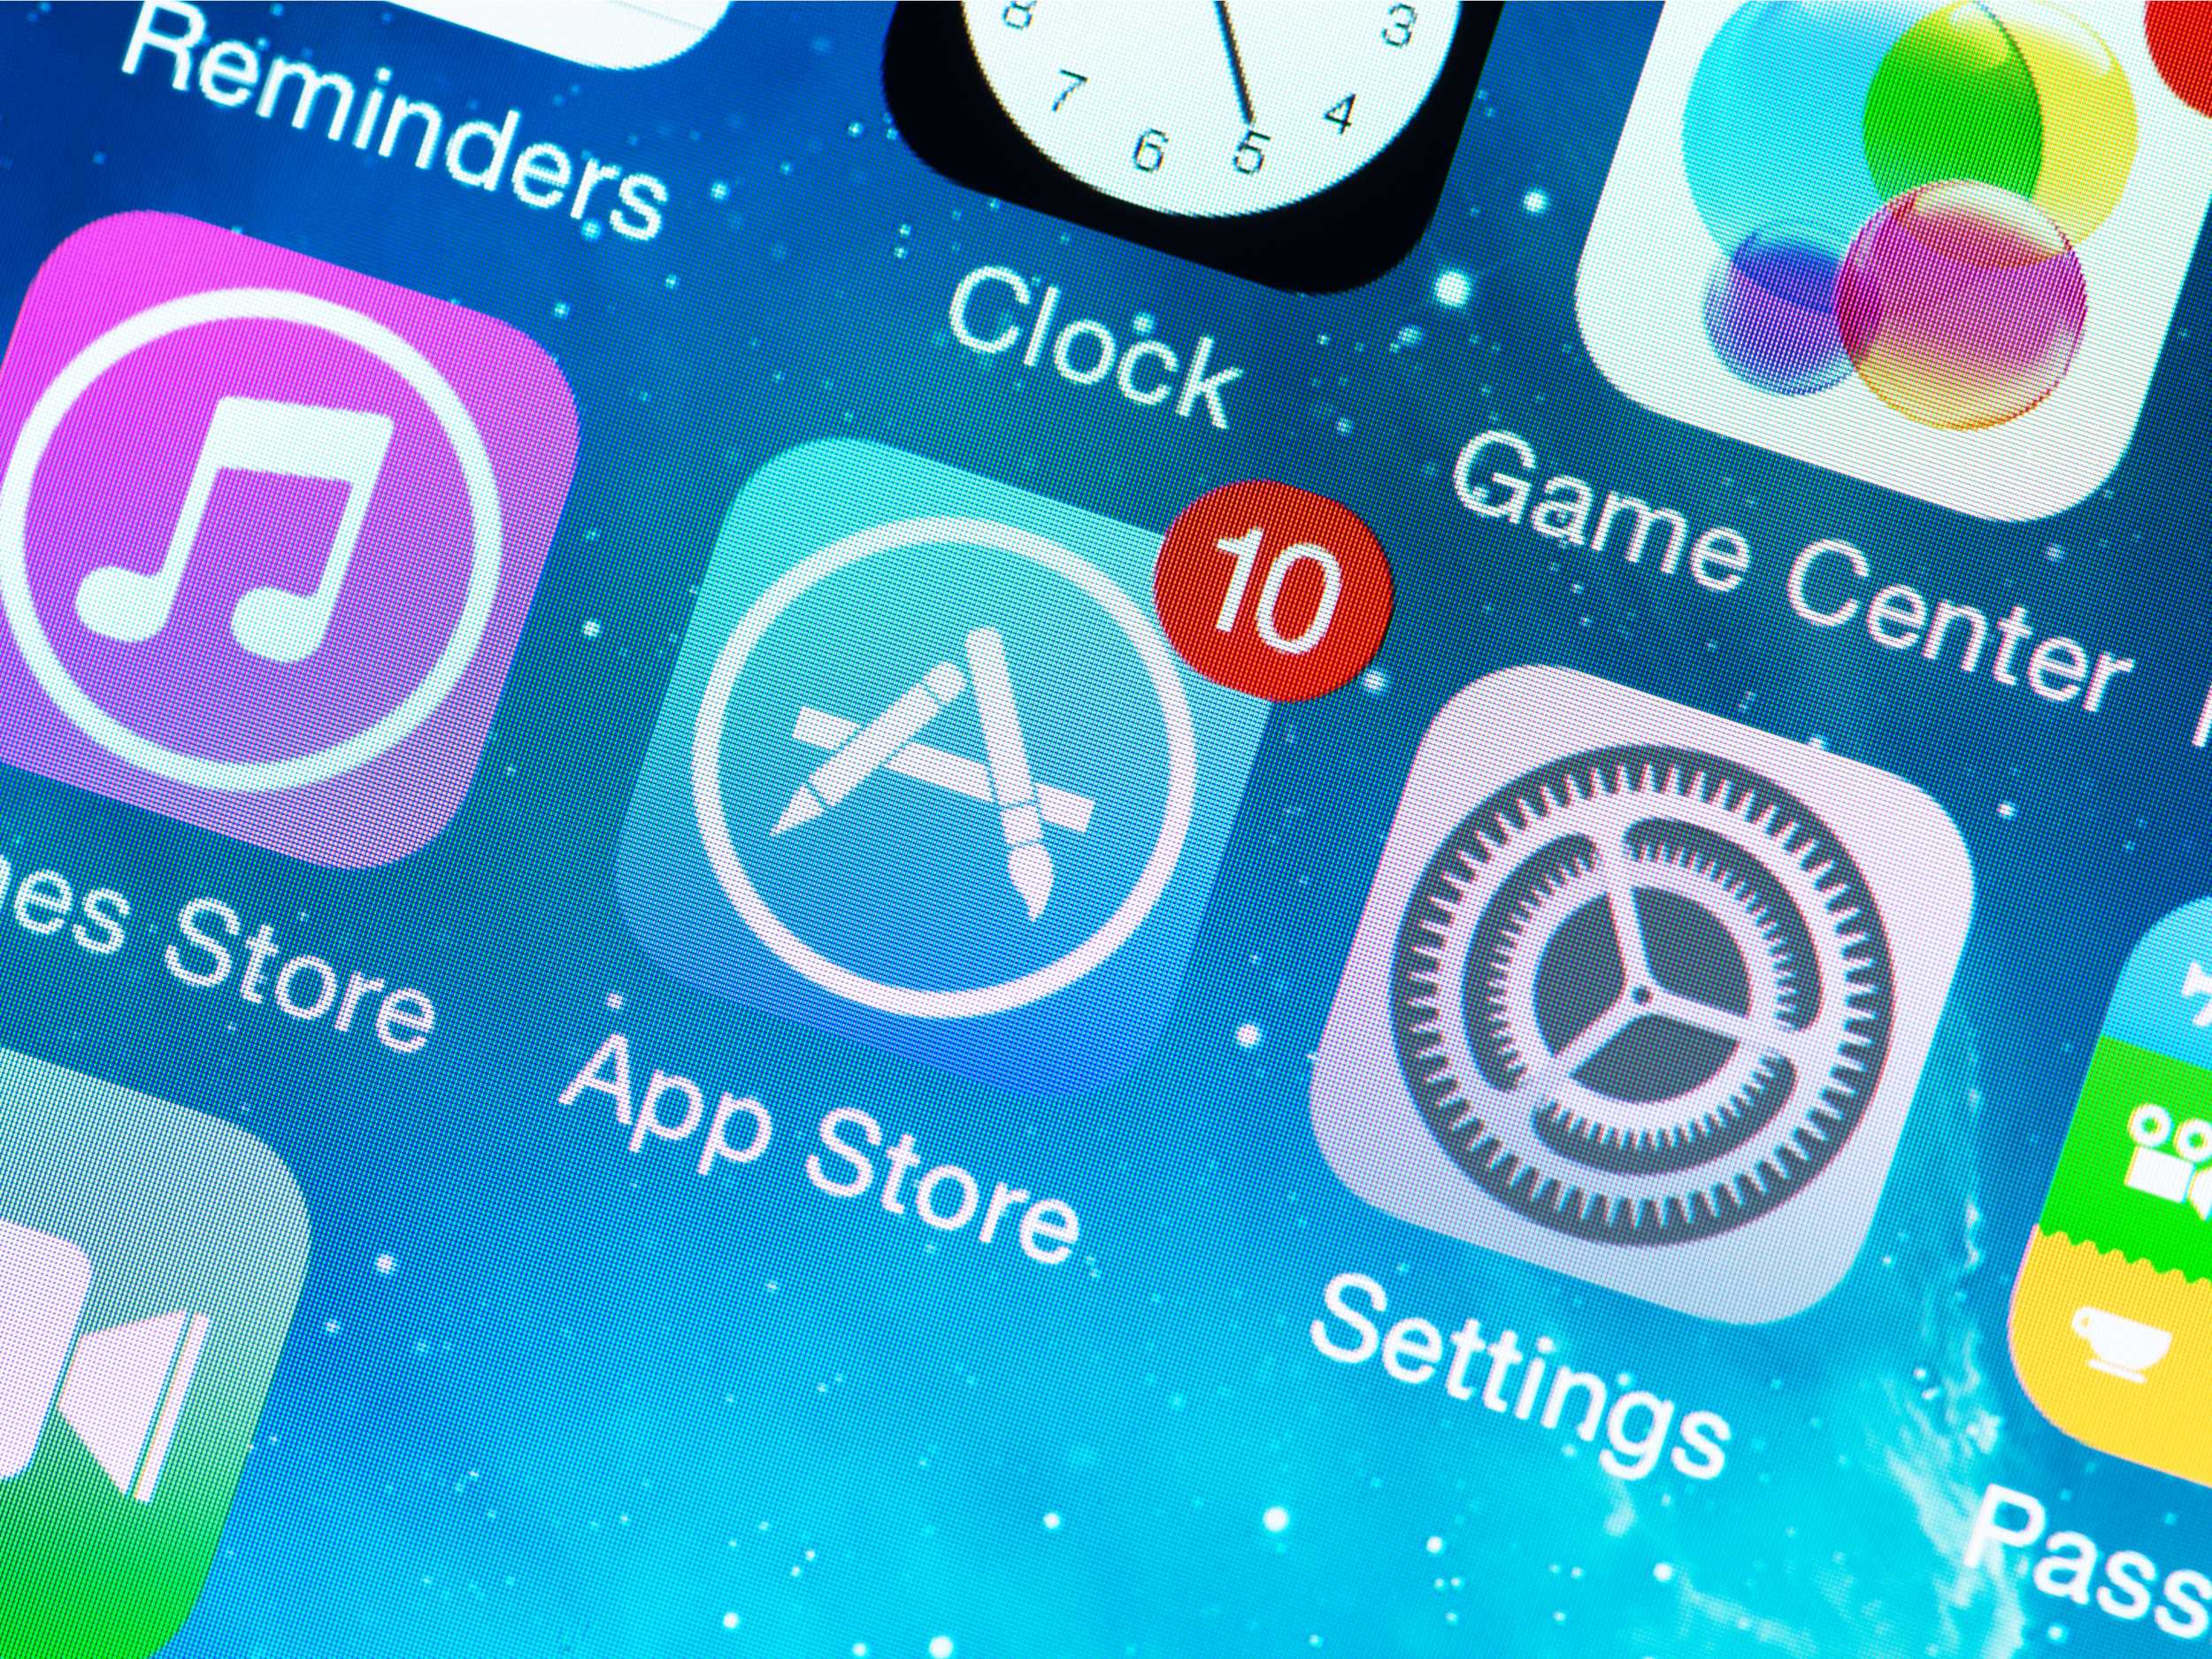 Apple applications. App Store. App Store приложения. Apple Store приложение. Wapstore.